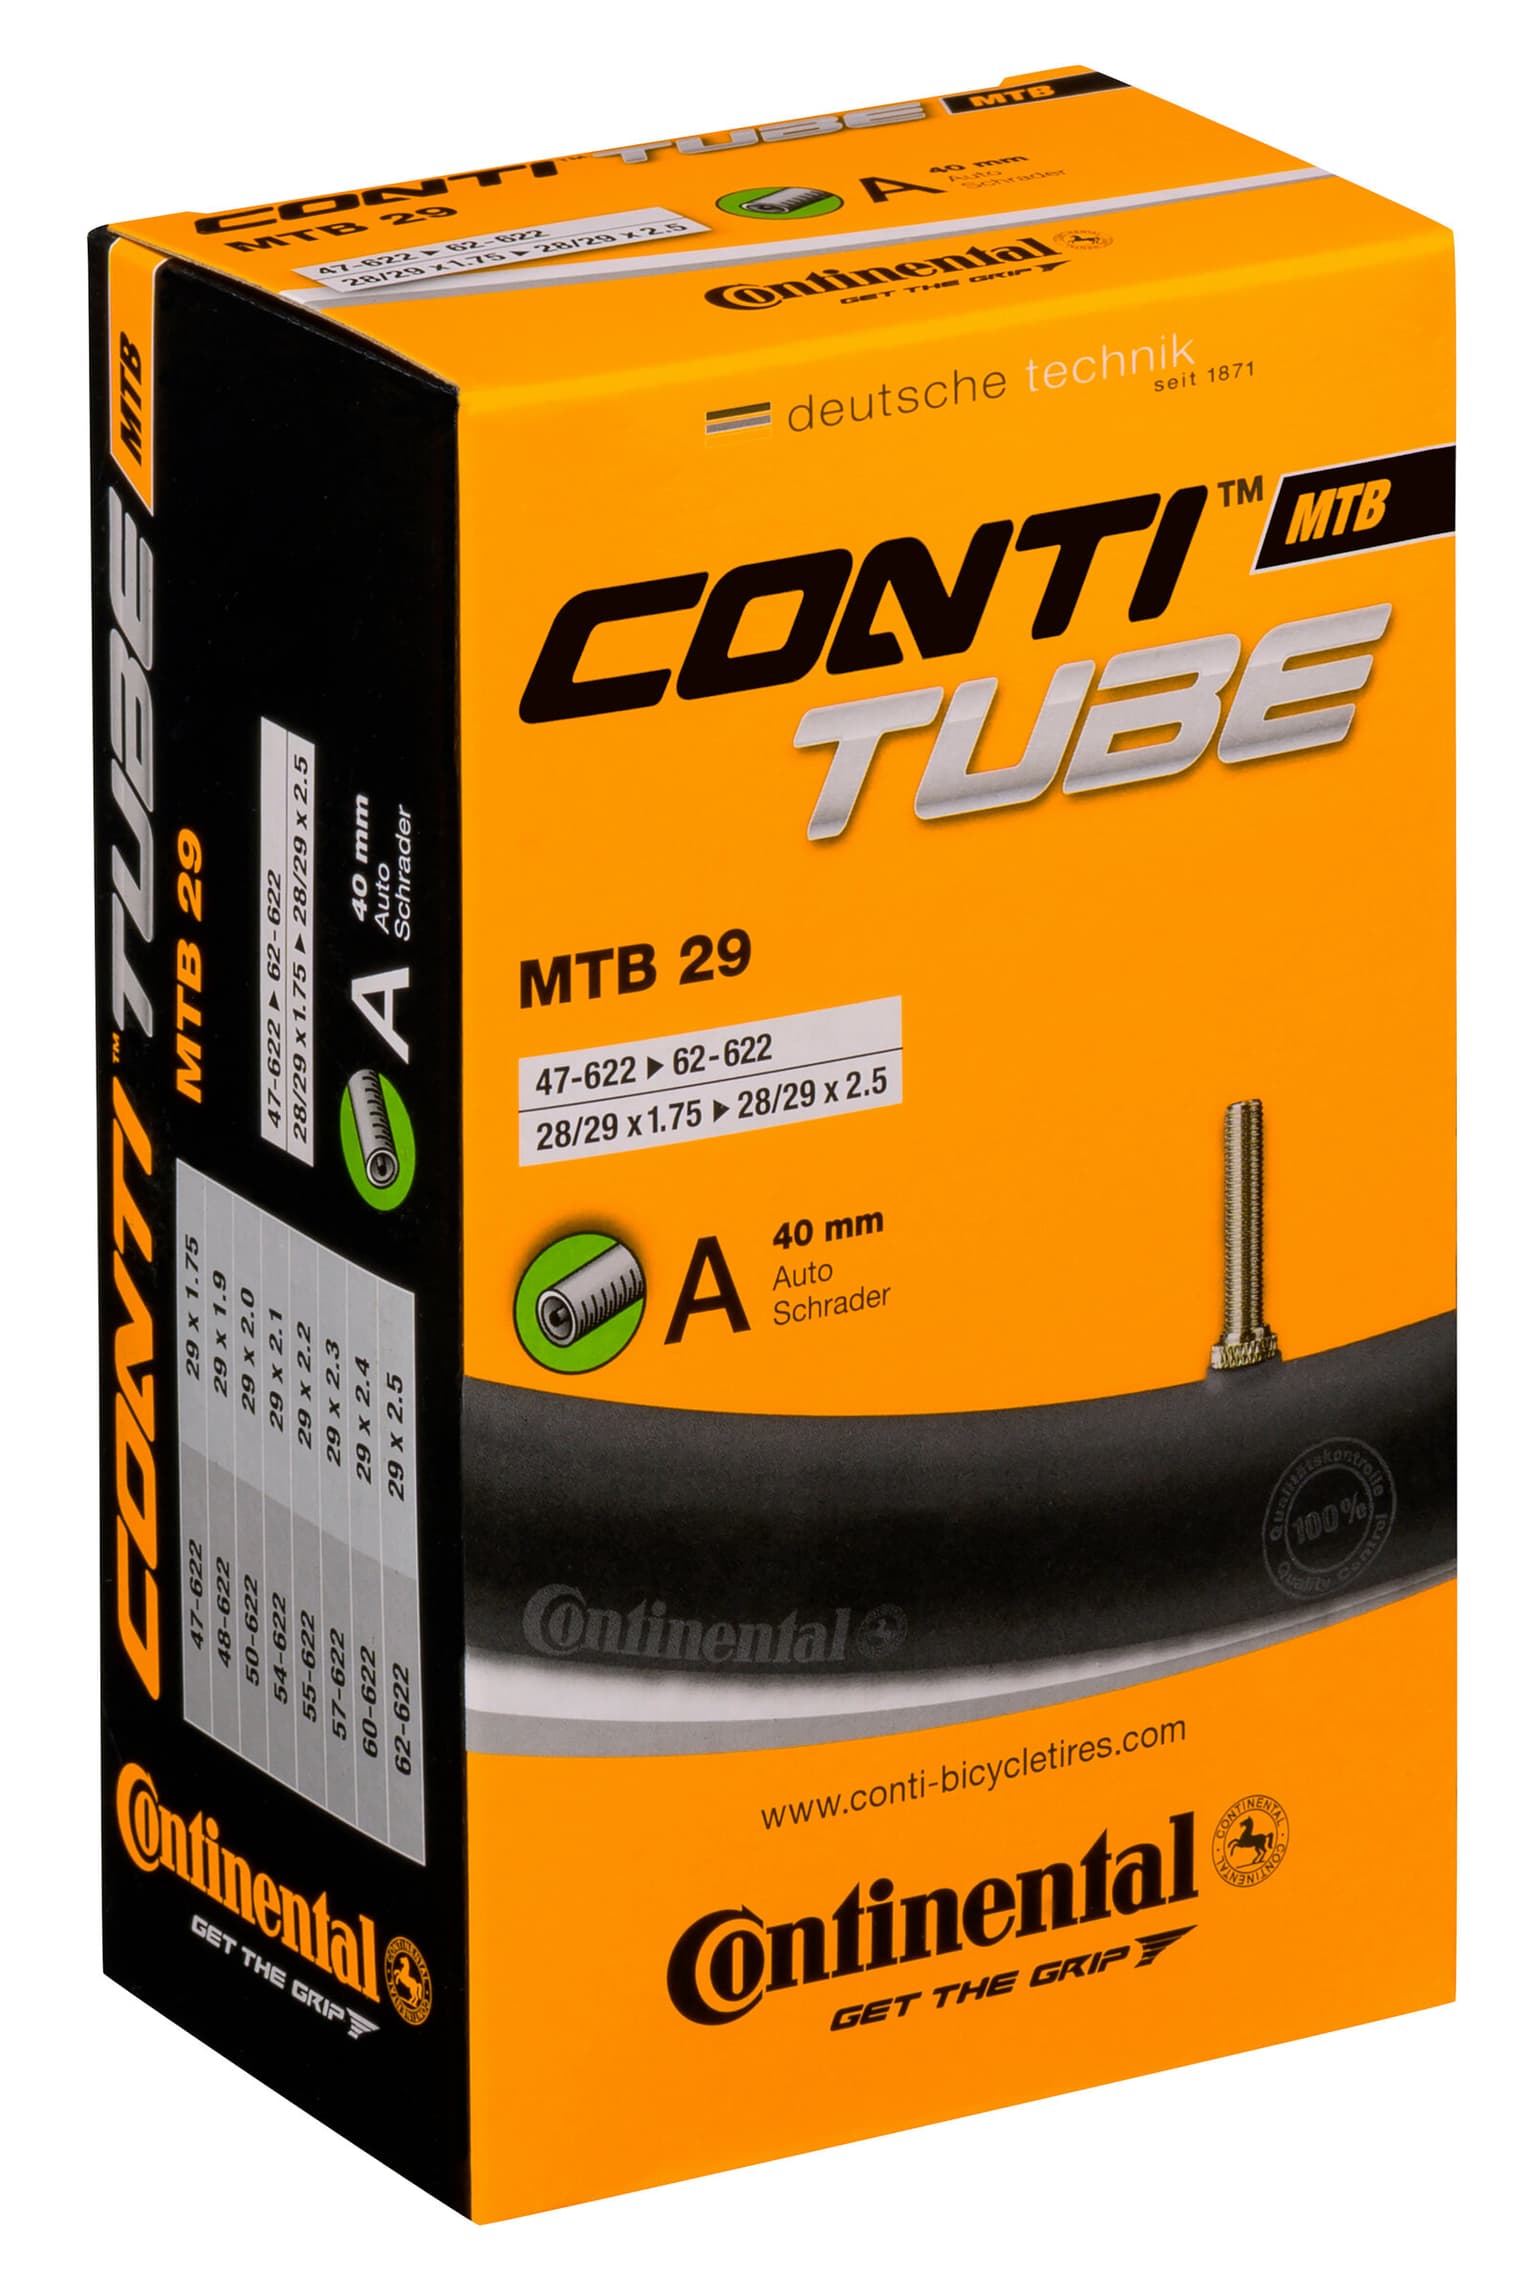 Continental Continental Conti MTB 29 A40 Camera d'aria per bicicletta 1